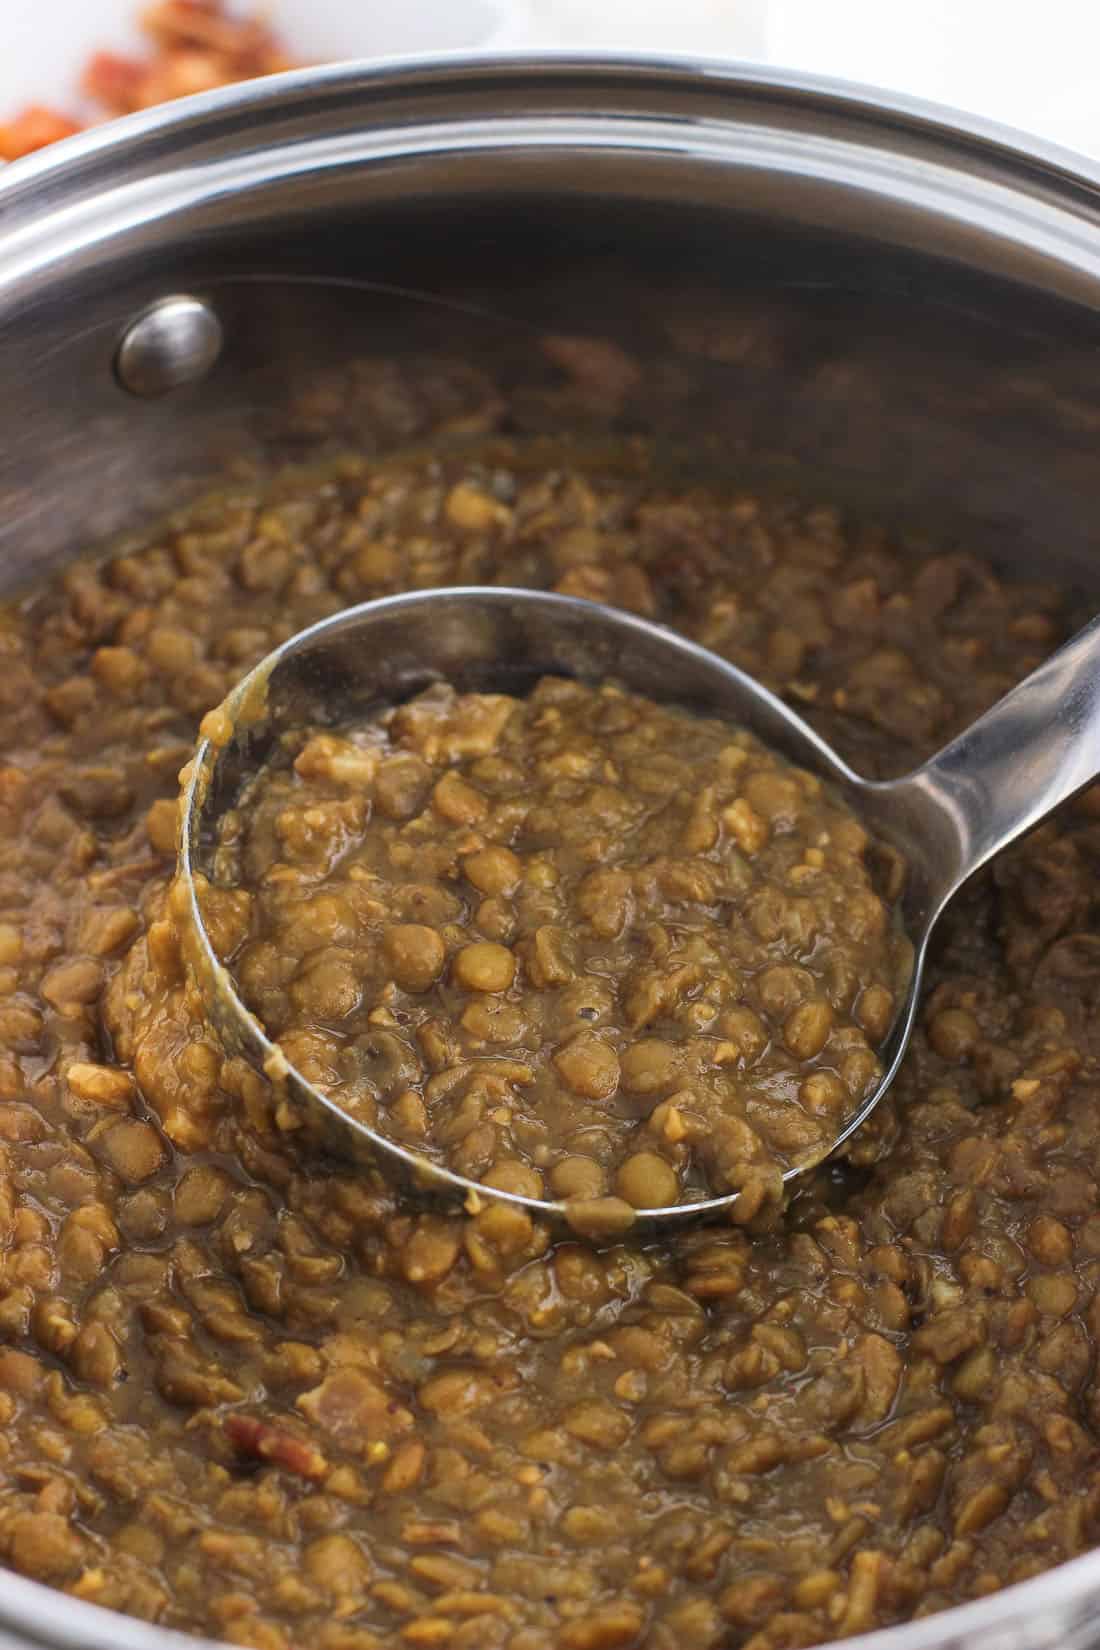 A ladle lifting out lentil soup from the pot.